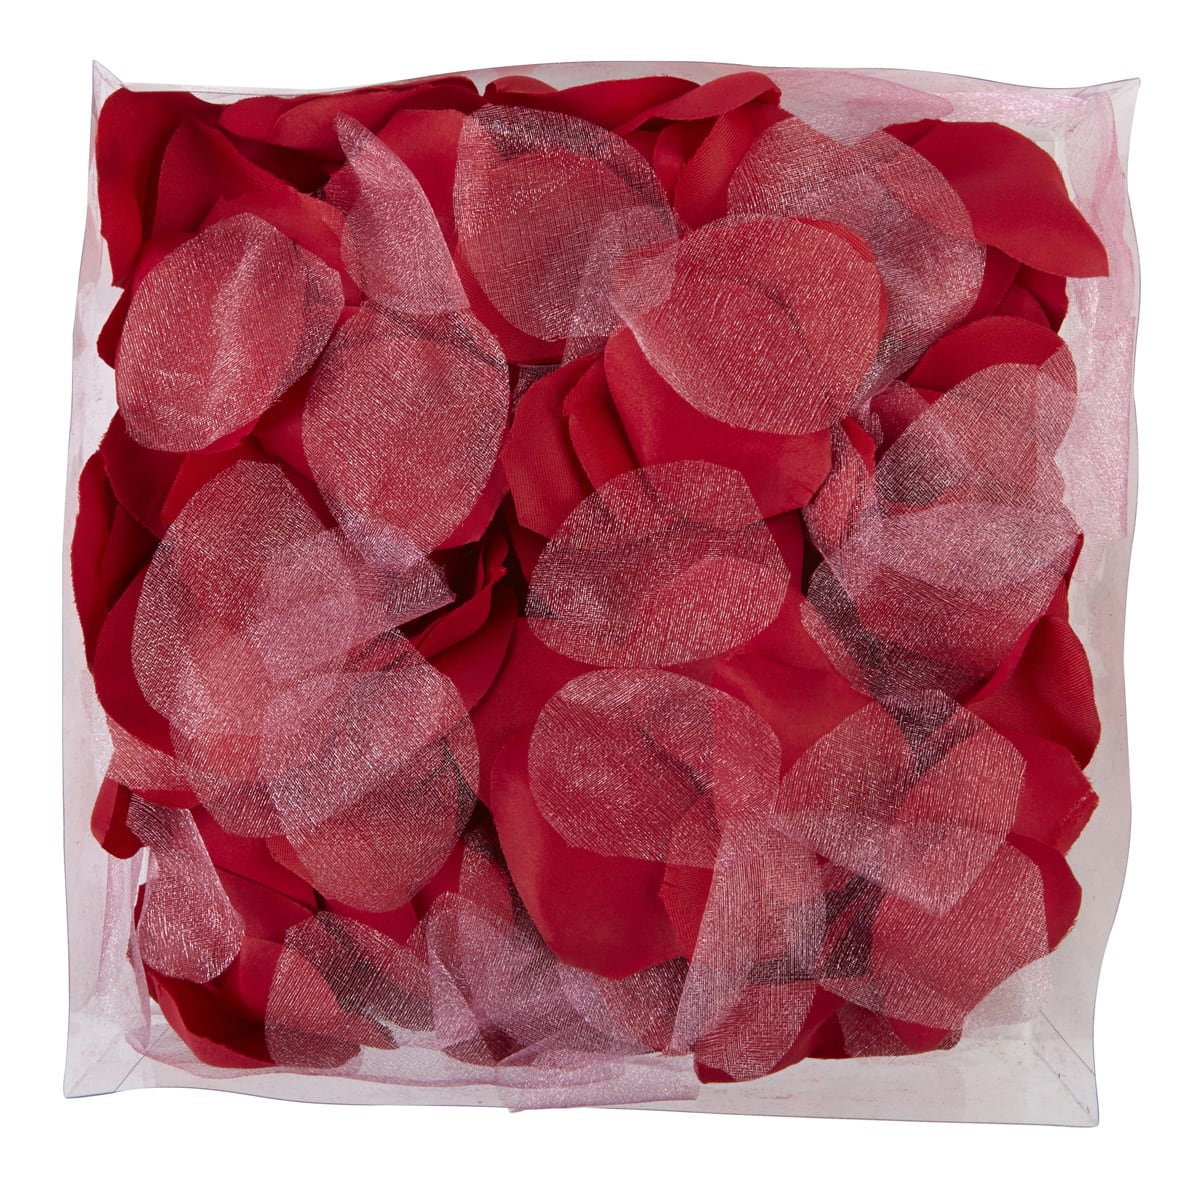 Kitcheniva Artificial Rose Petals DIY Craft Decorations